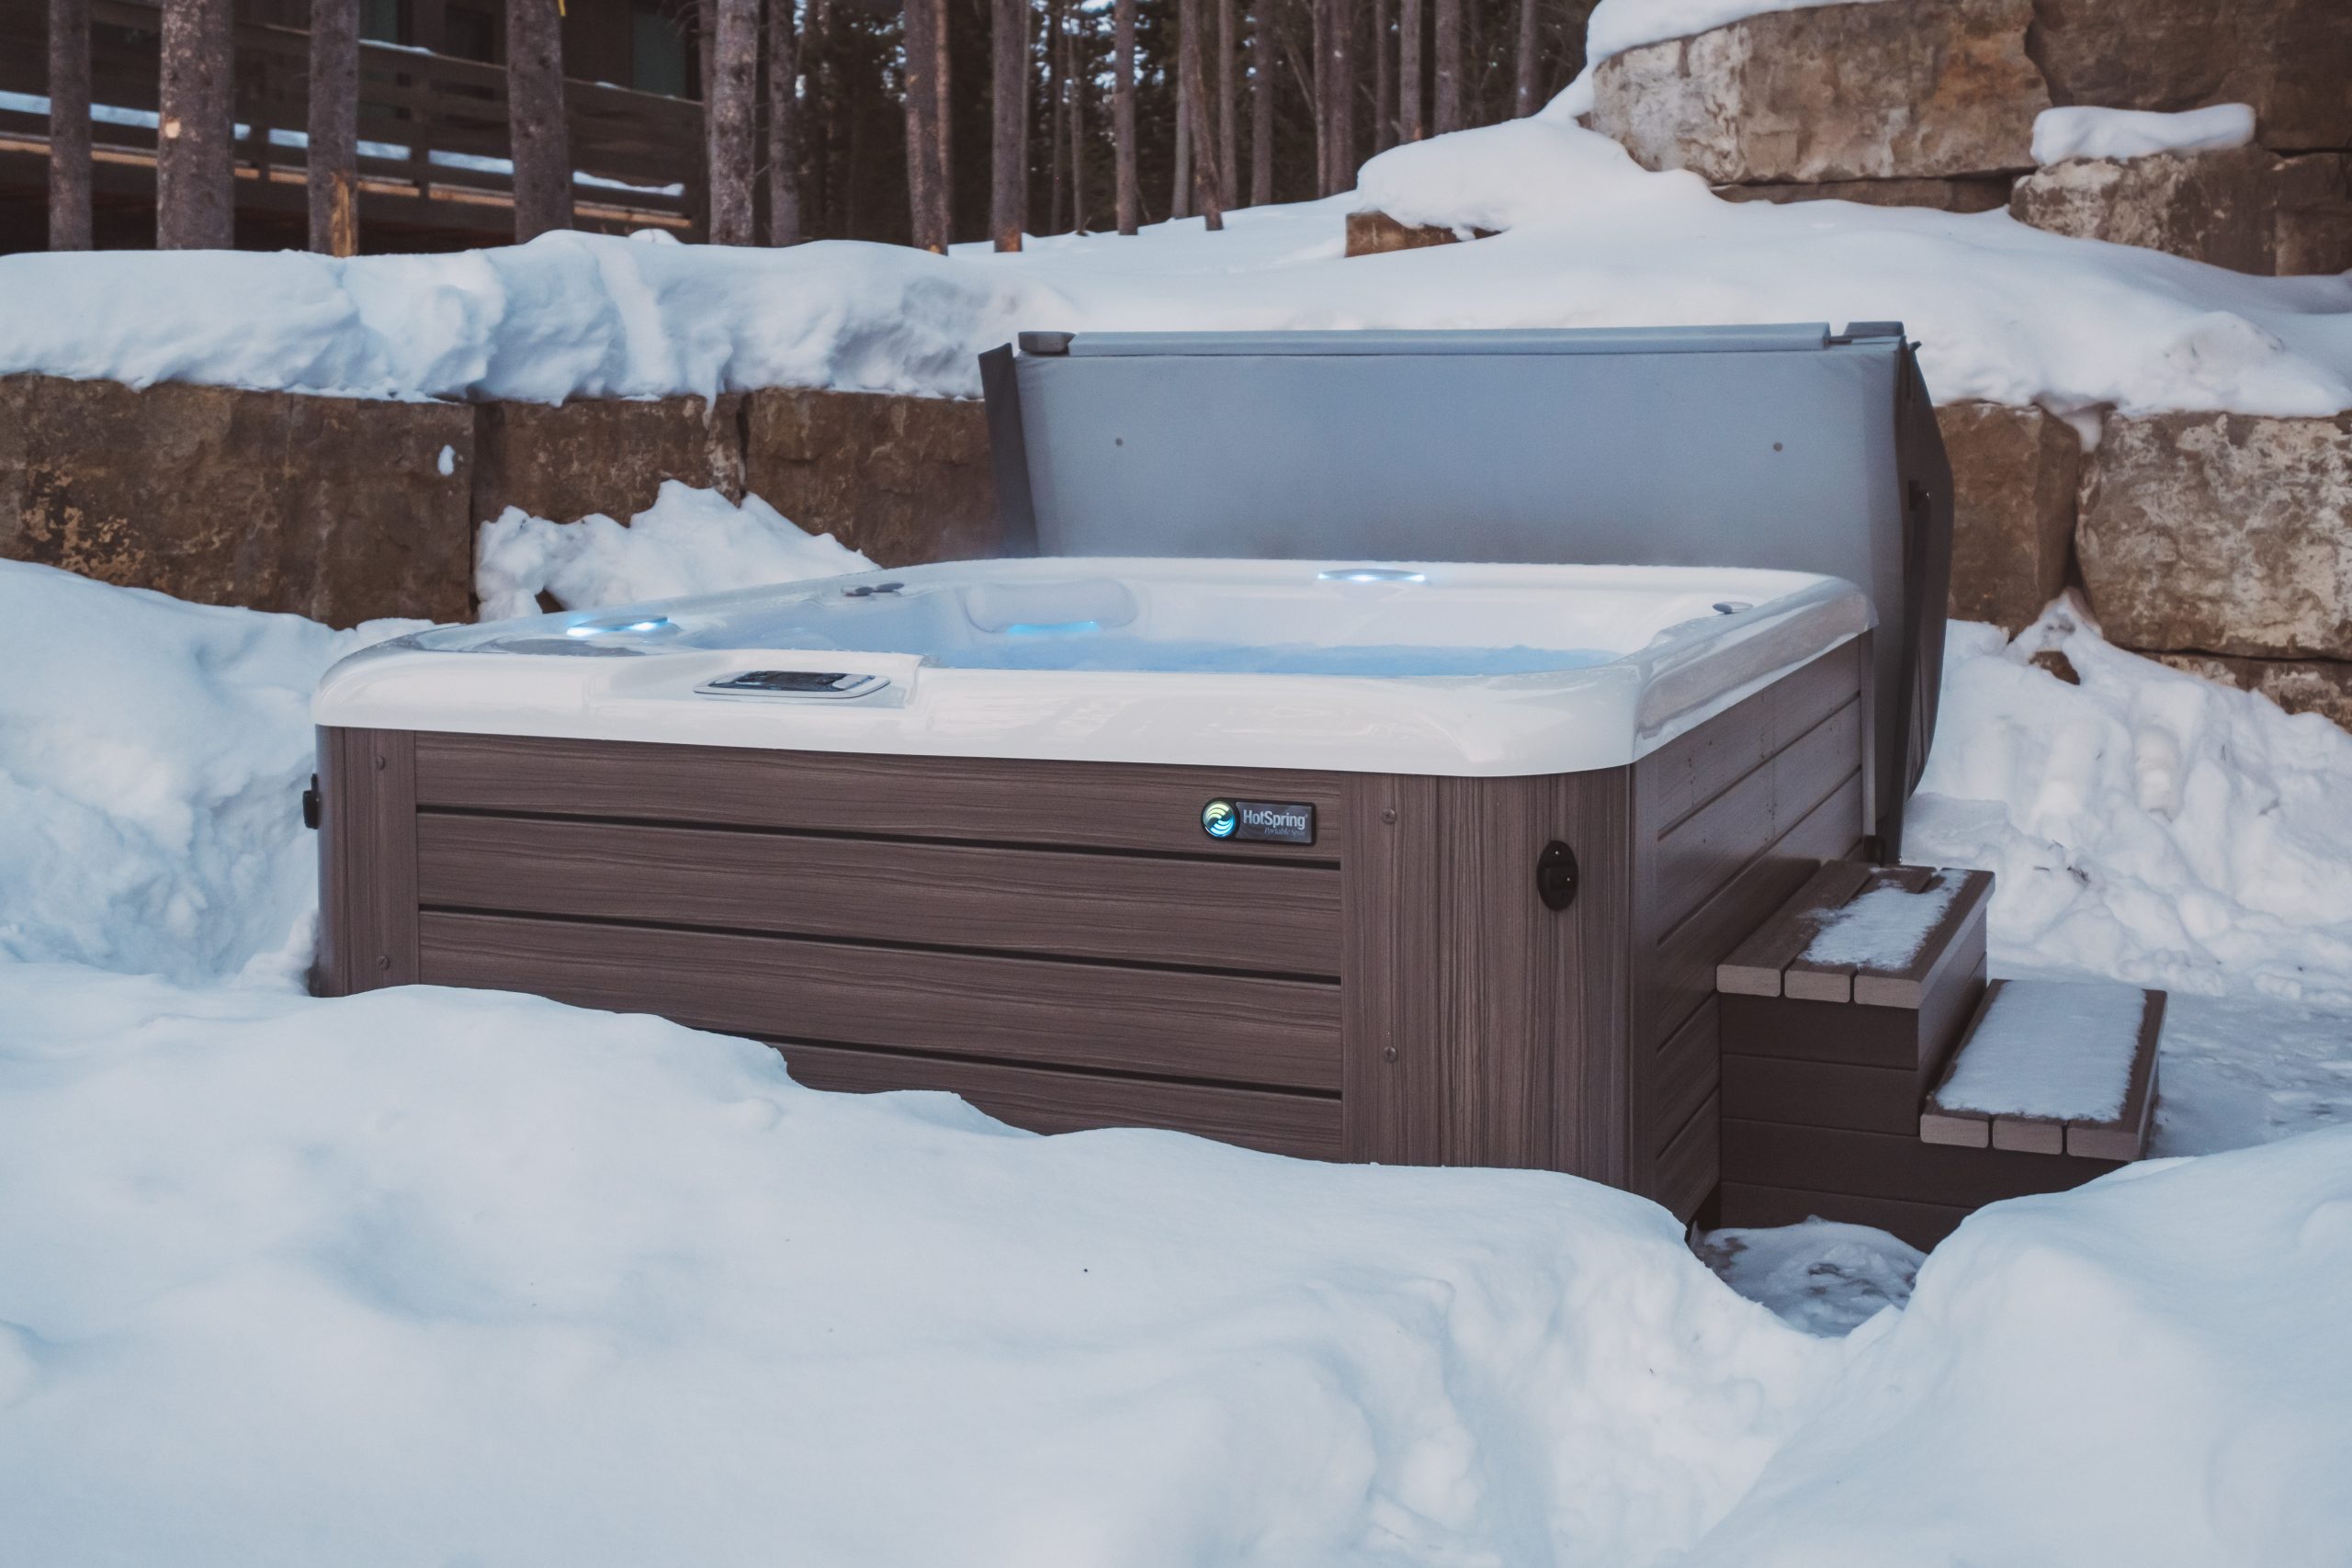 Tips for Maximizing Winter Hot Tub Enjoyment